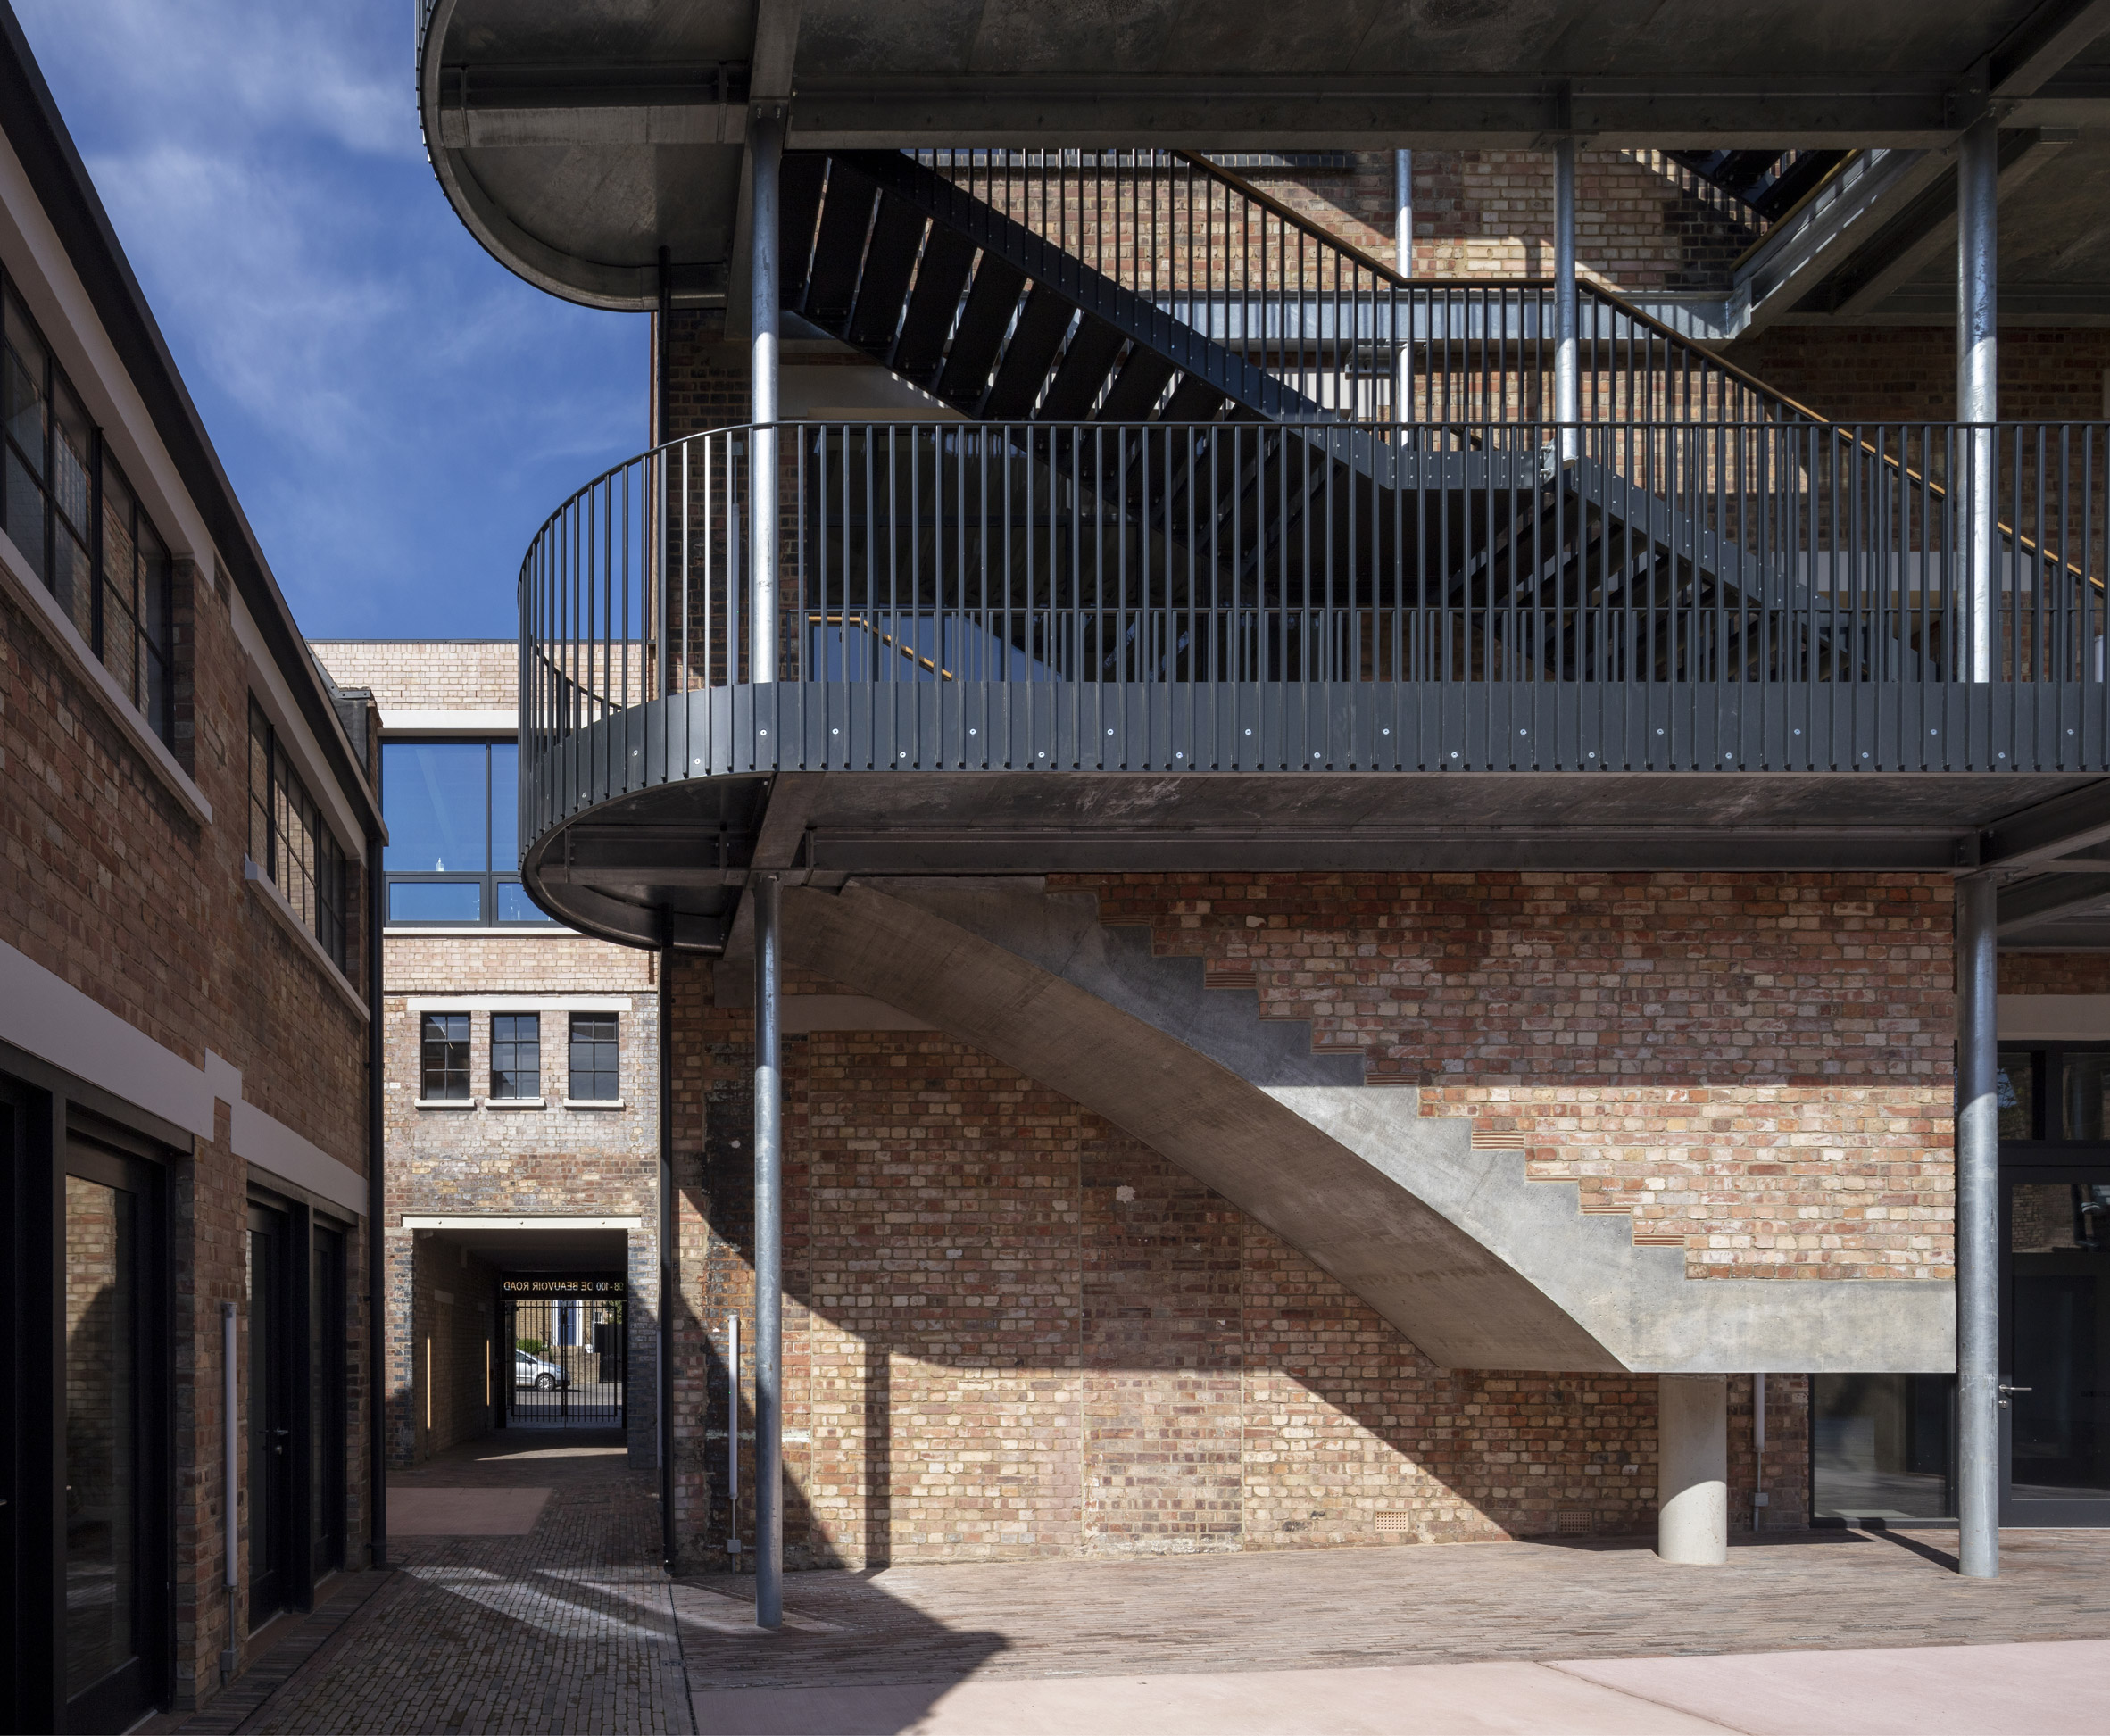 External staircases De Beauvoir Road creative studios by Henley Halebrown